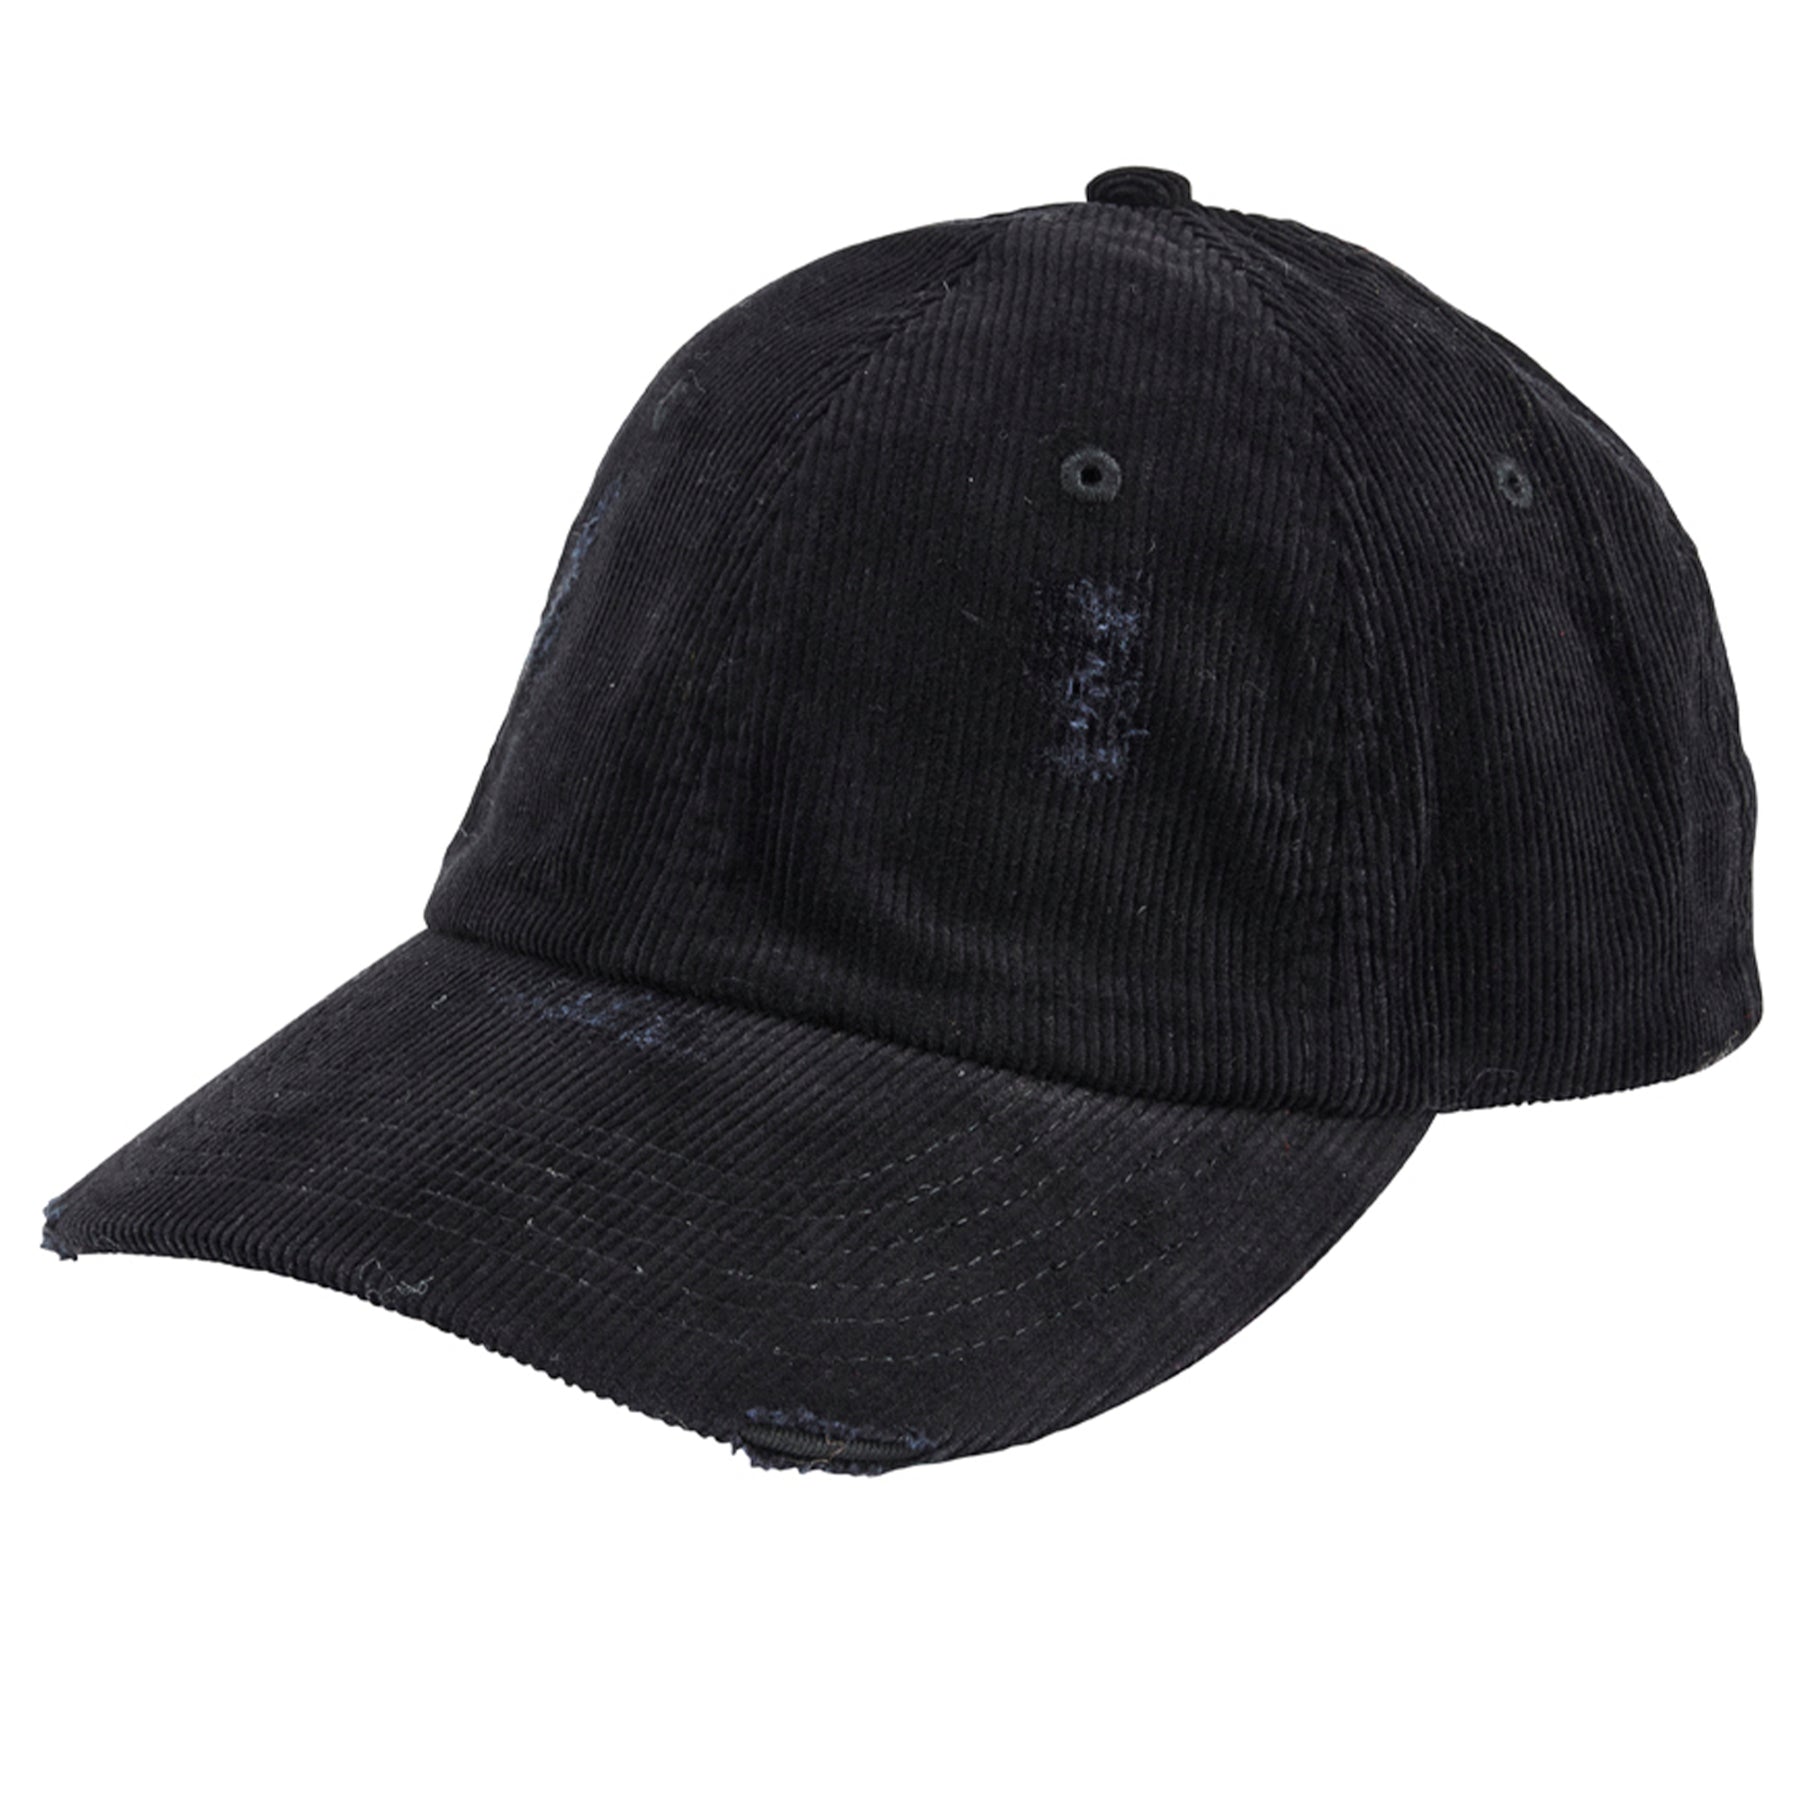 Distressed cord ball cap – San Diego Hat Company